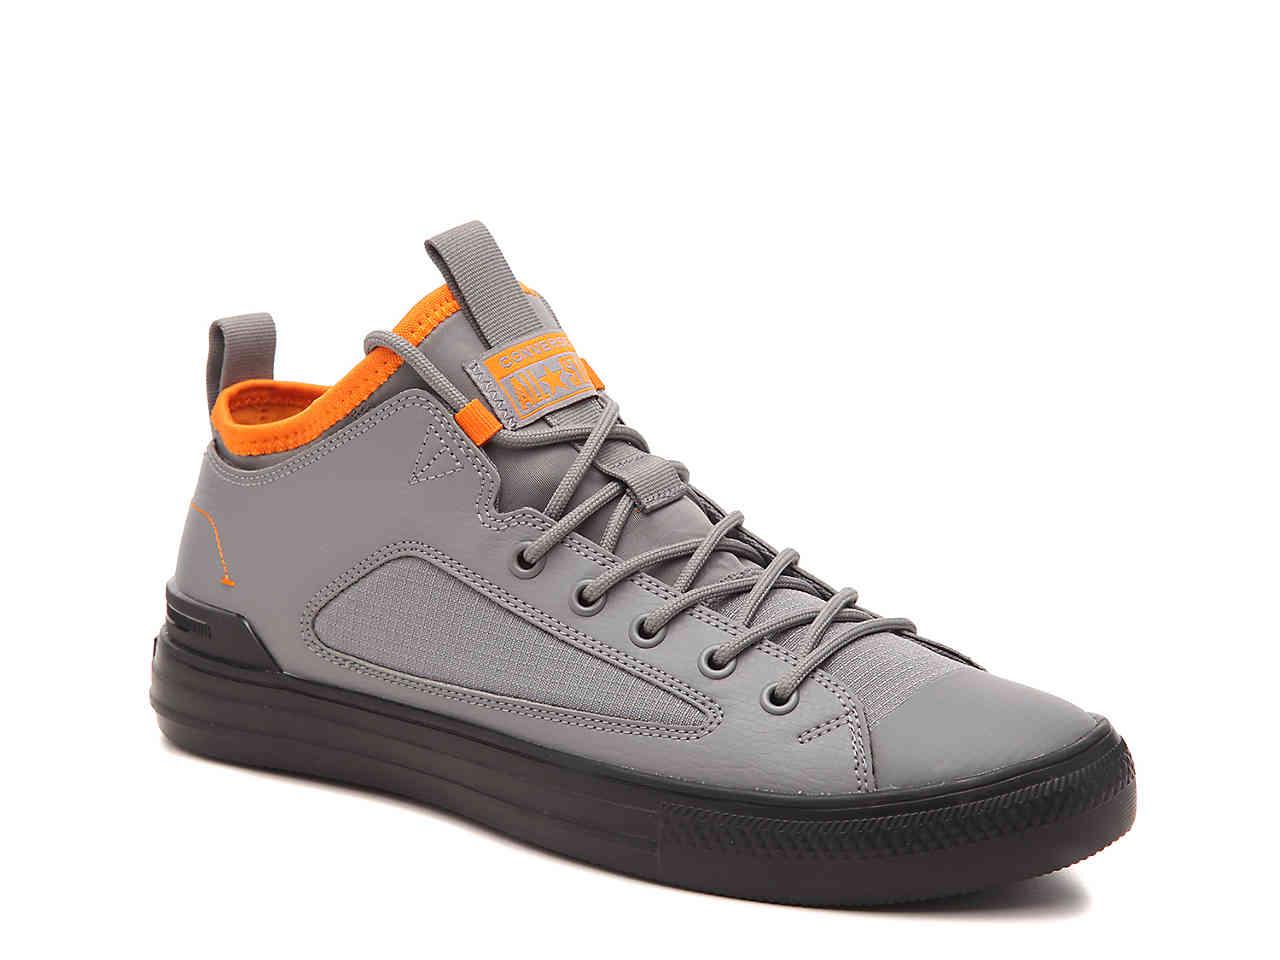 Converse Neoprene Chuck Taylor All Star Ultra Sneaker in Grey/Orange (Gray)  for Men - Lyst